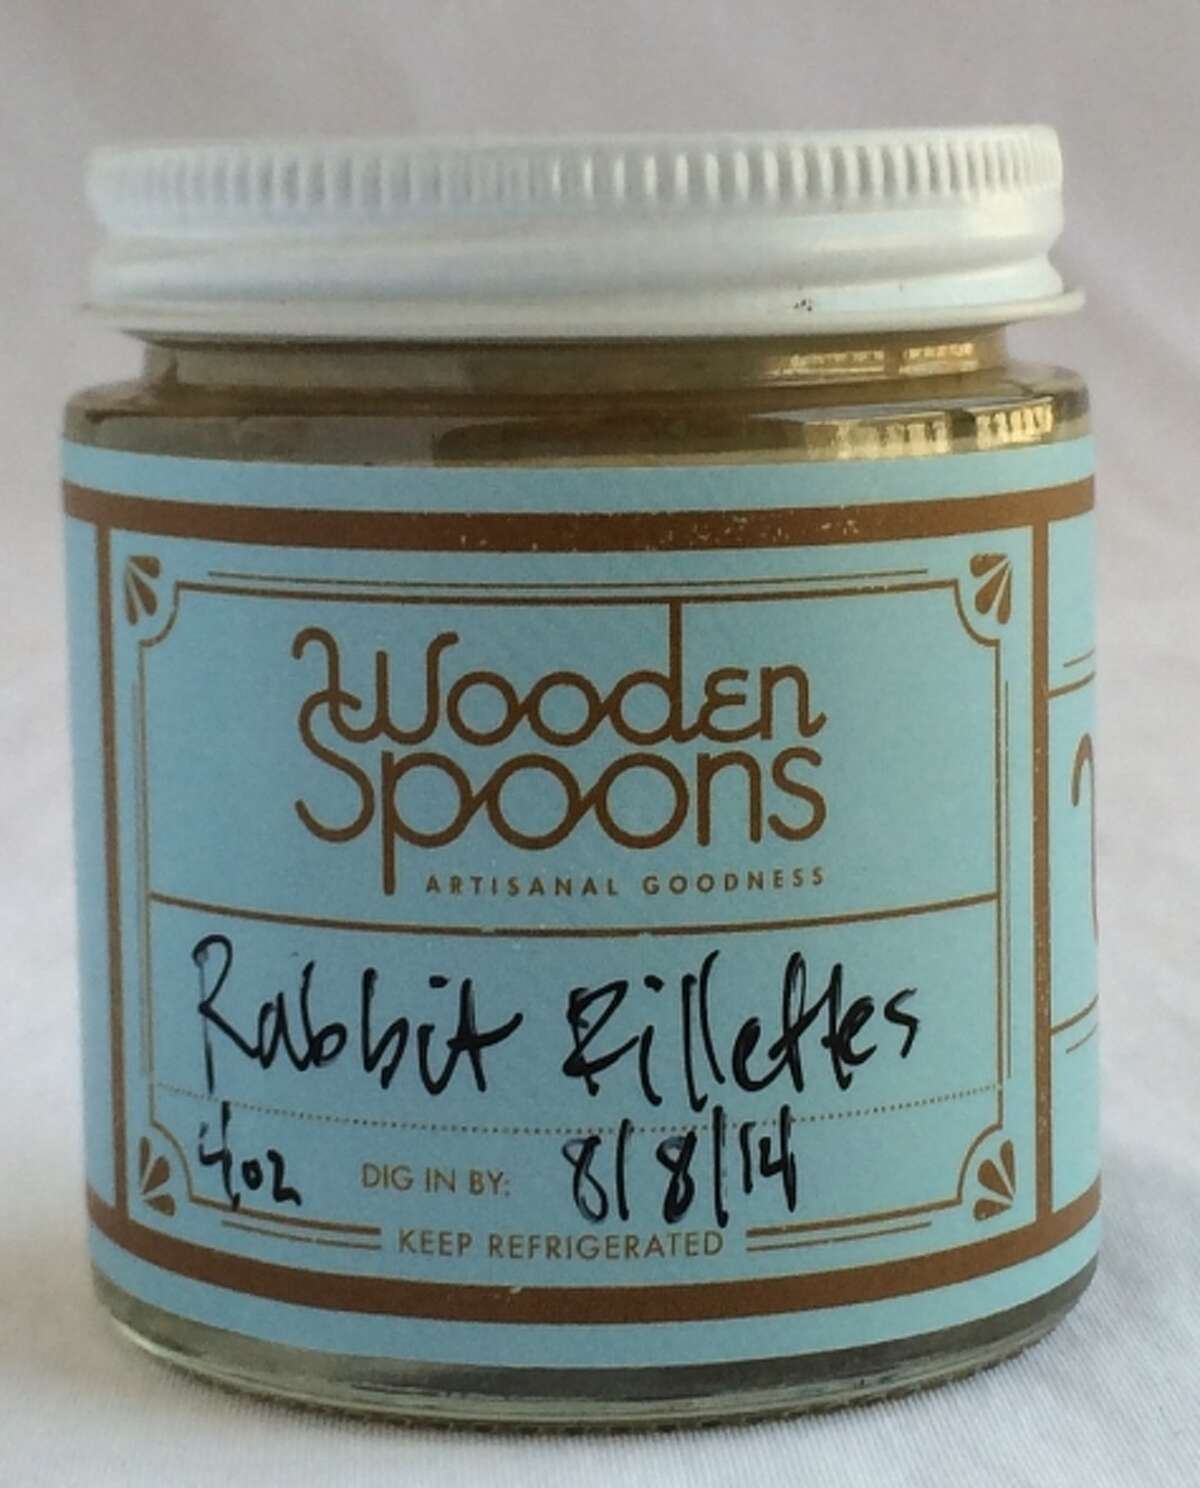 Wooden Spoons rabbit rillettes.